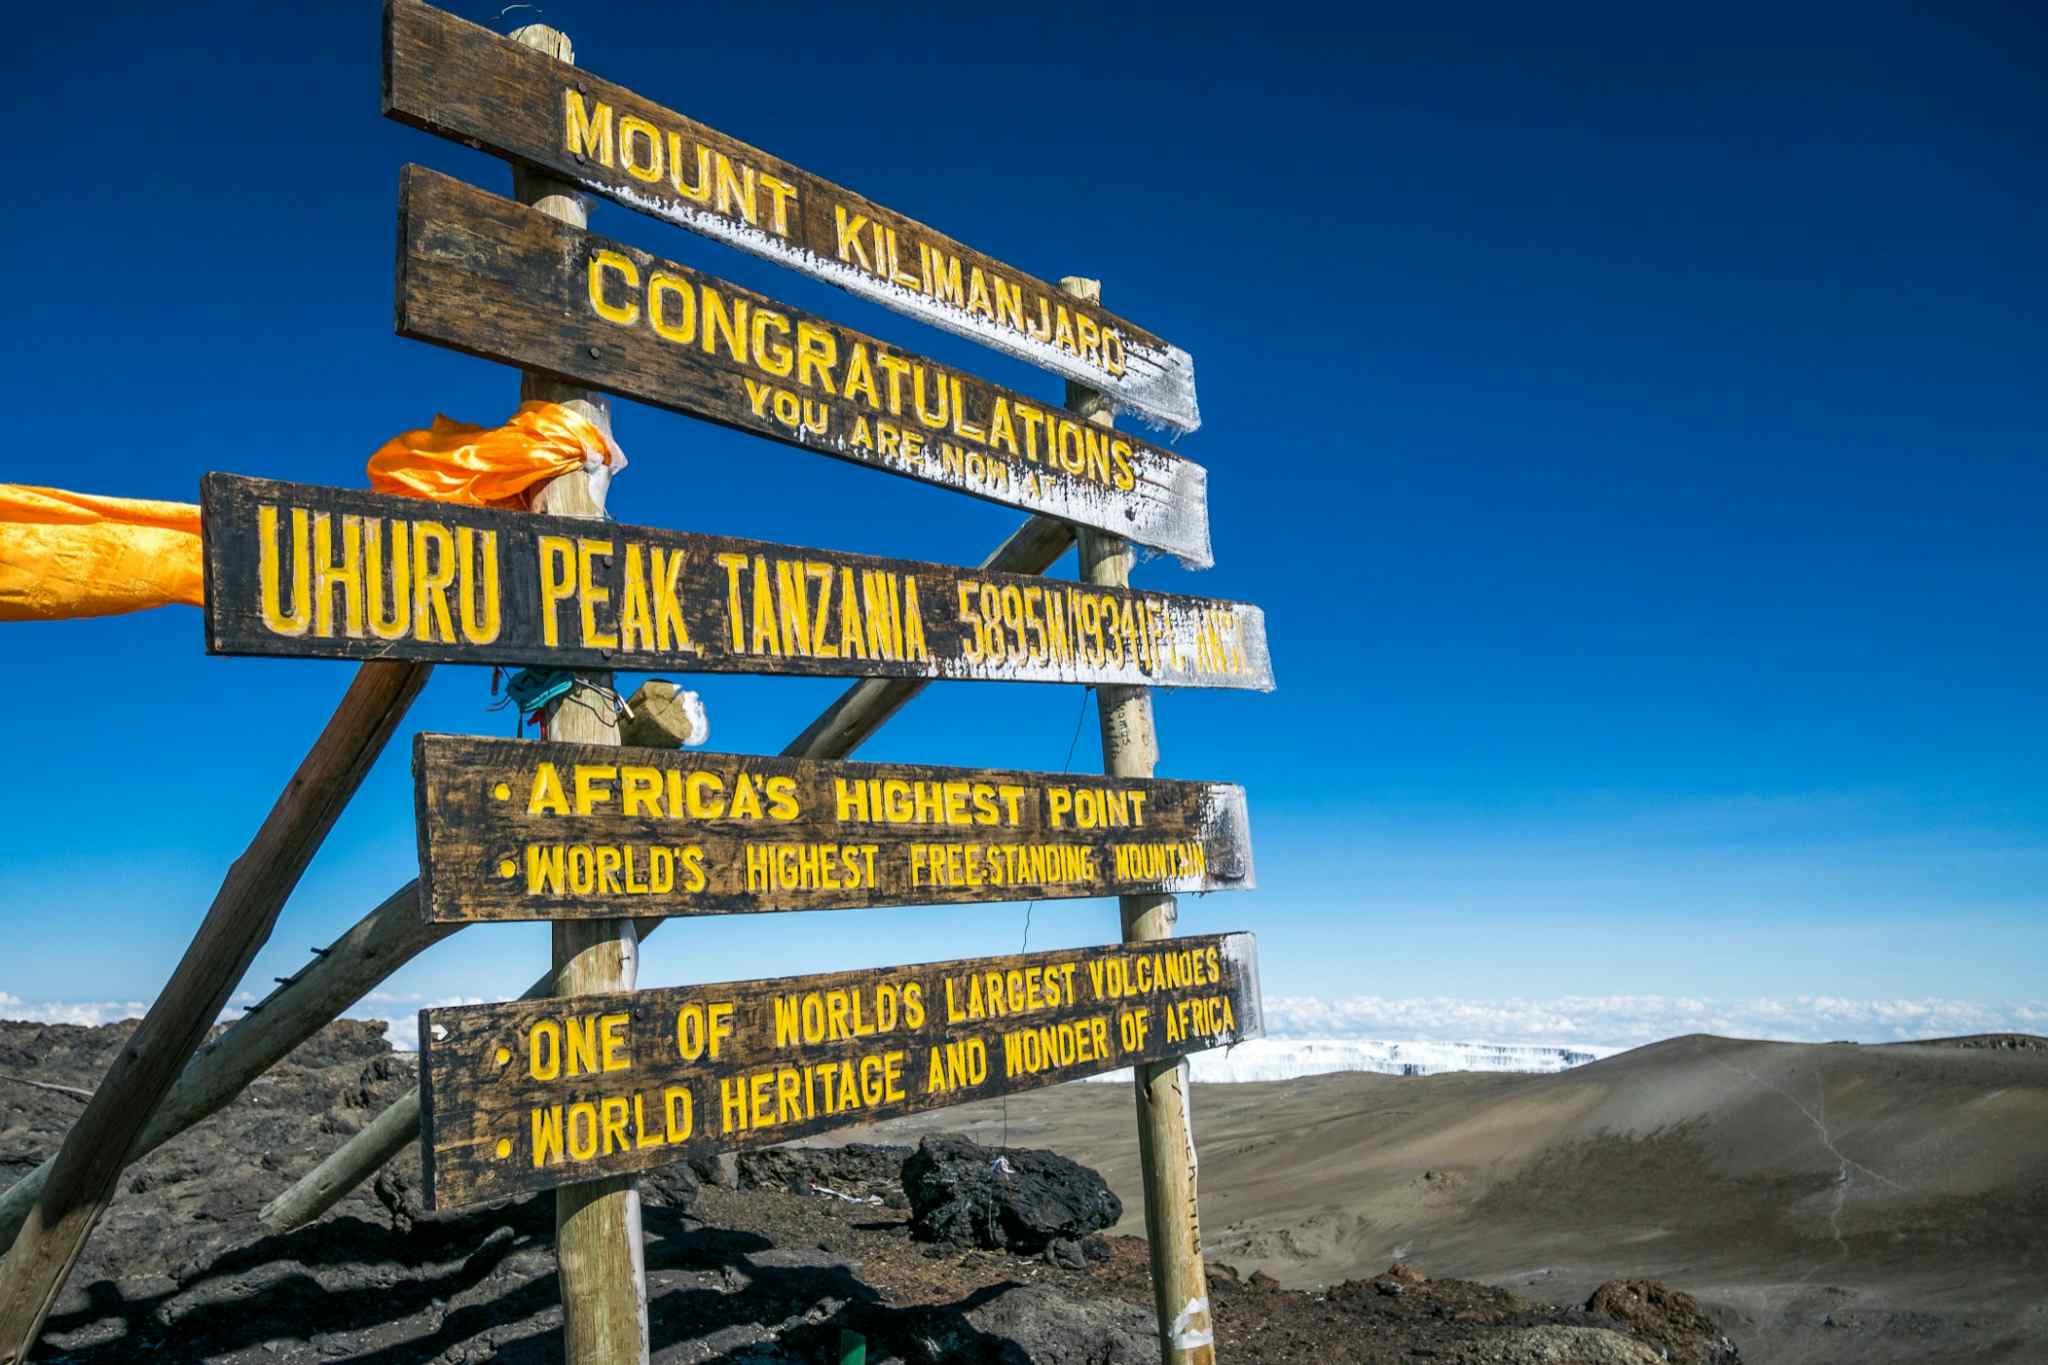 View of the sign at Uhuru Peak on Mount Kilimanjaro, Tanzania.